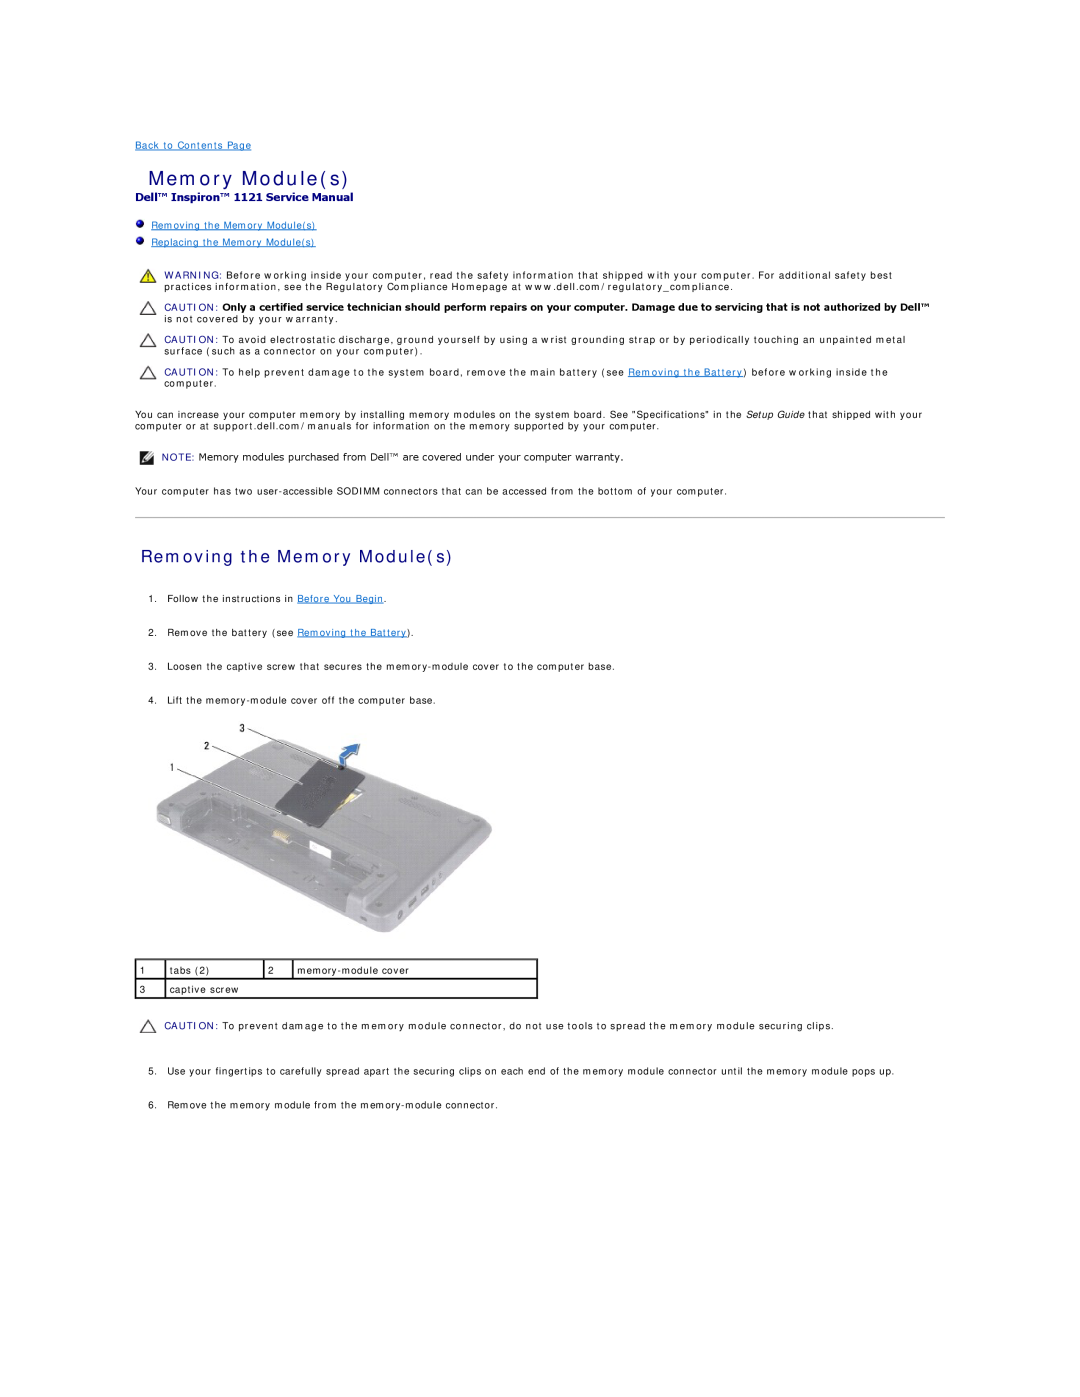 Dell manual Removing the Memory Modules, Dell Inspiron 1121 Service Manual 